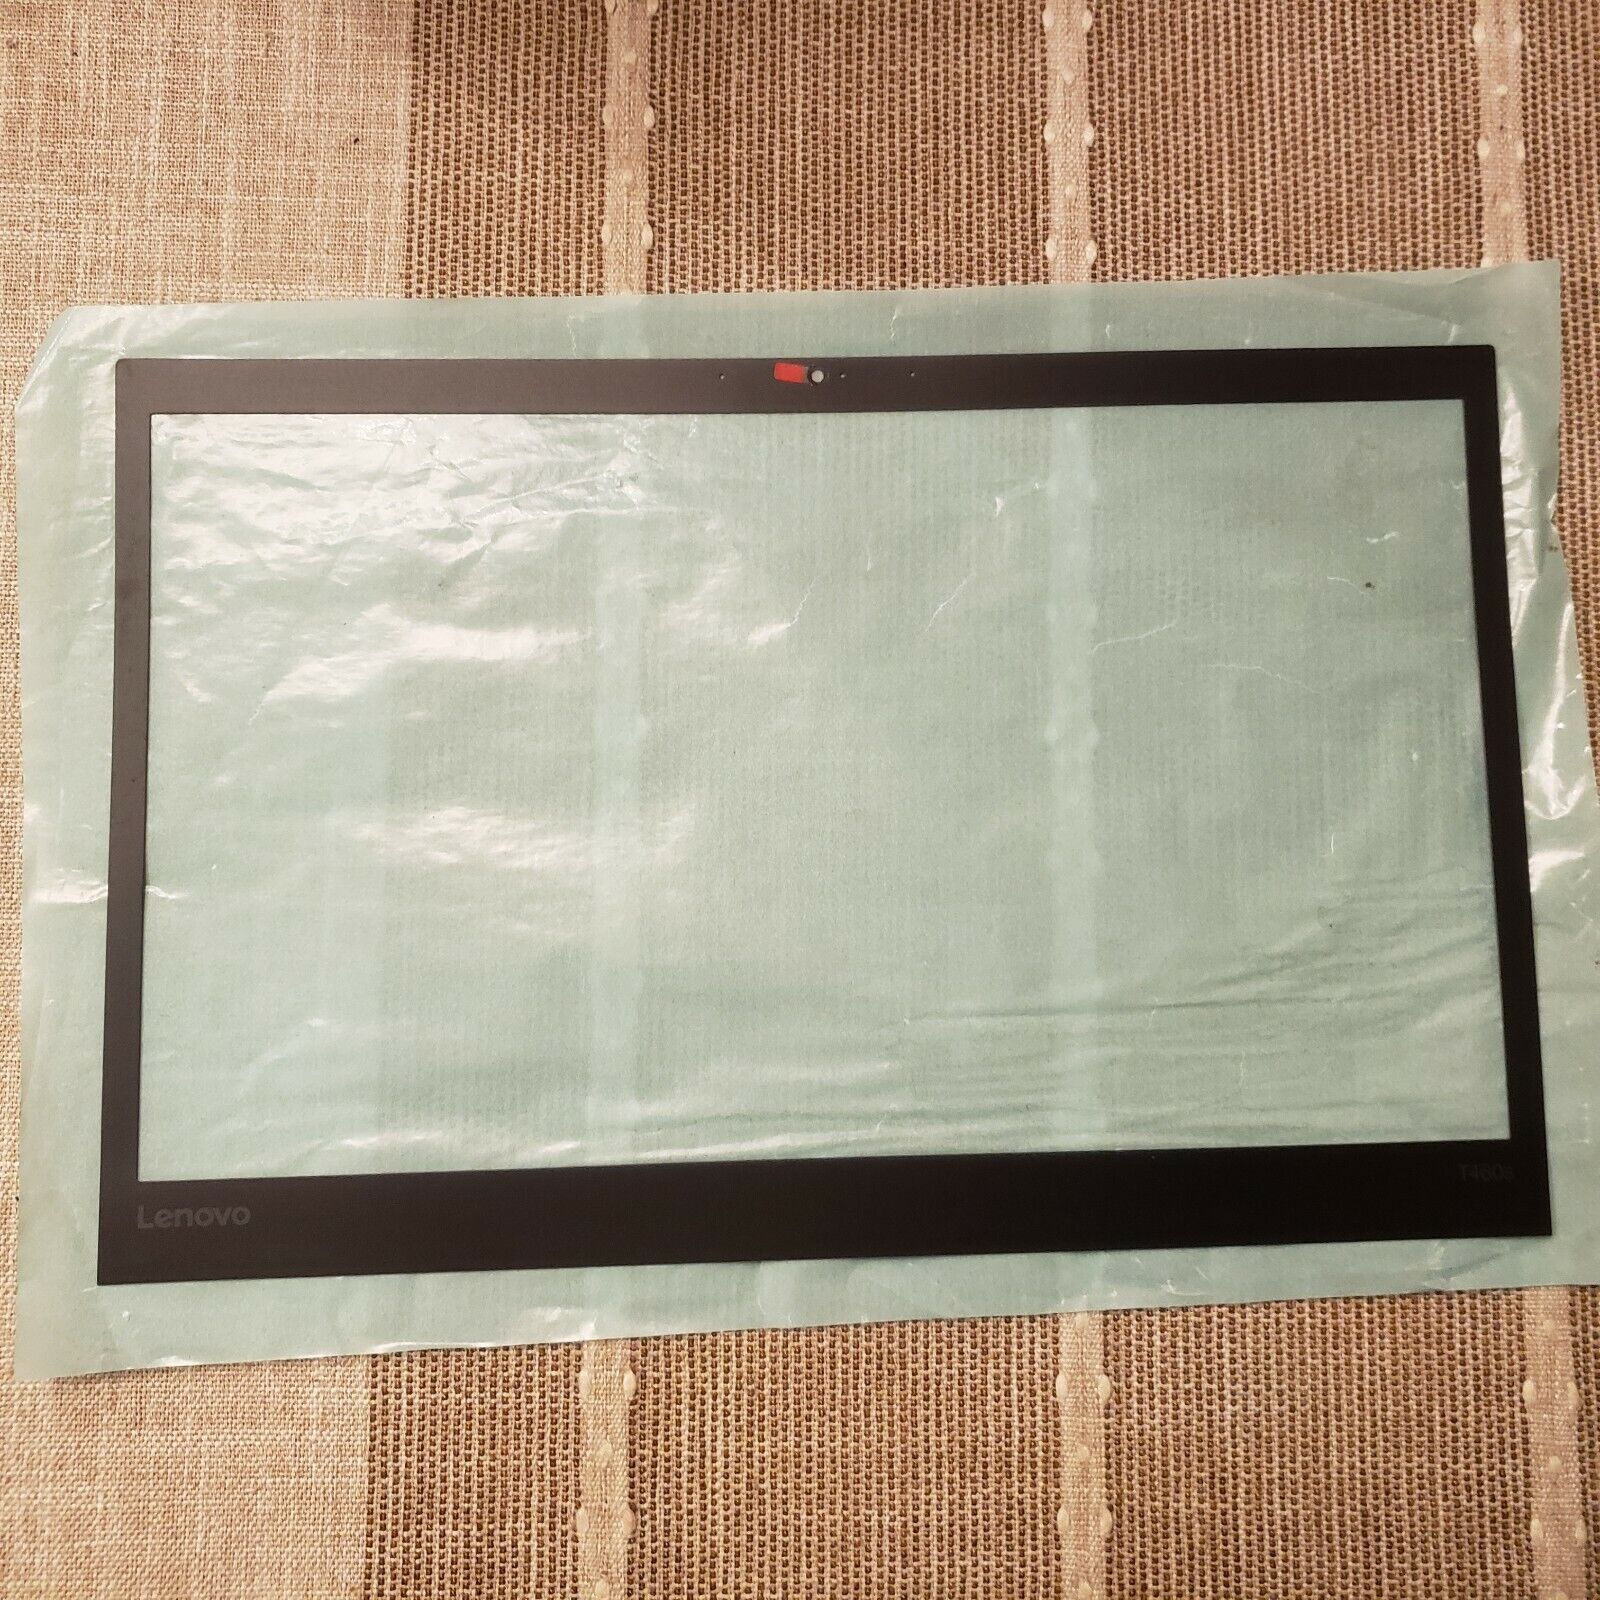 New Lenovo ThinkPad T460S Lcd Screen Front Bezel Cover Sheet Sticker P/N 00JT996